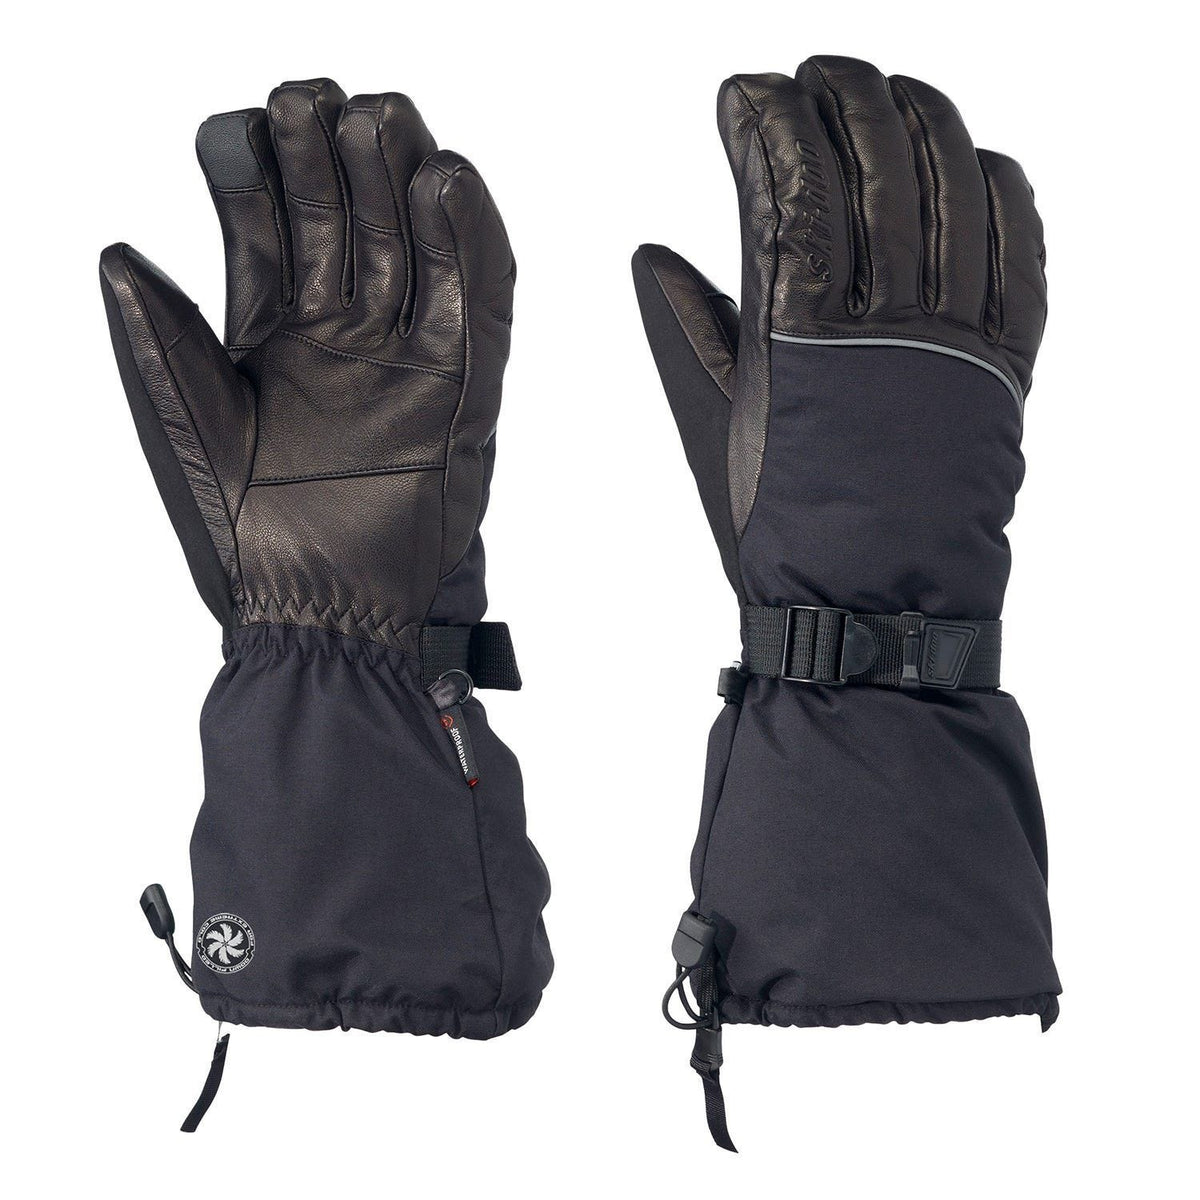 Ski-Doo Absolute 0 Gloves